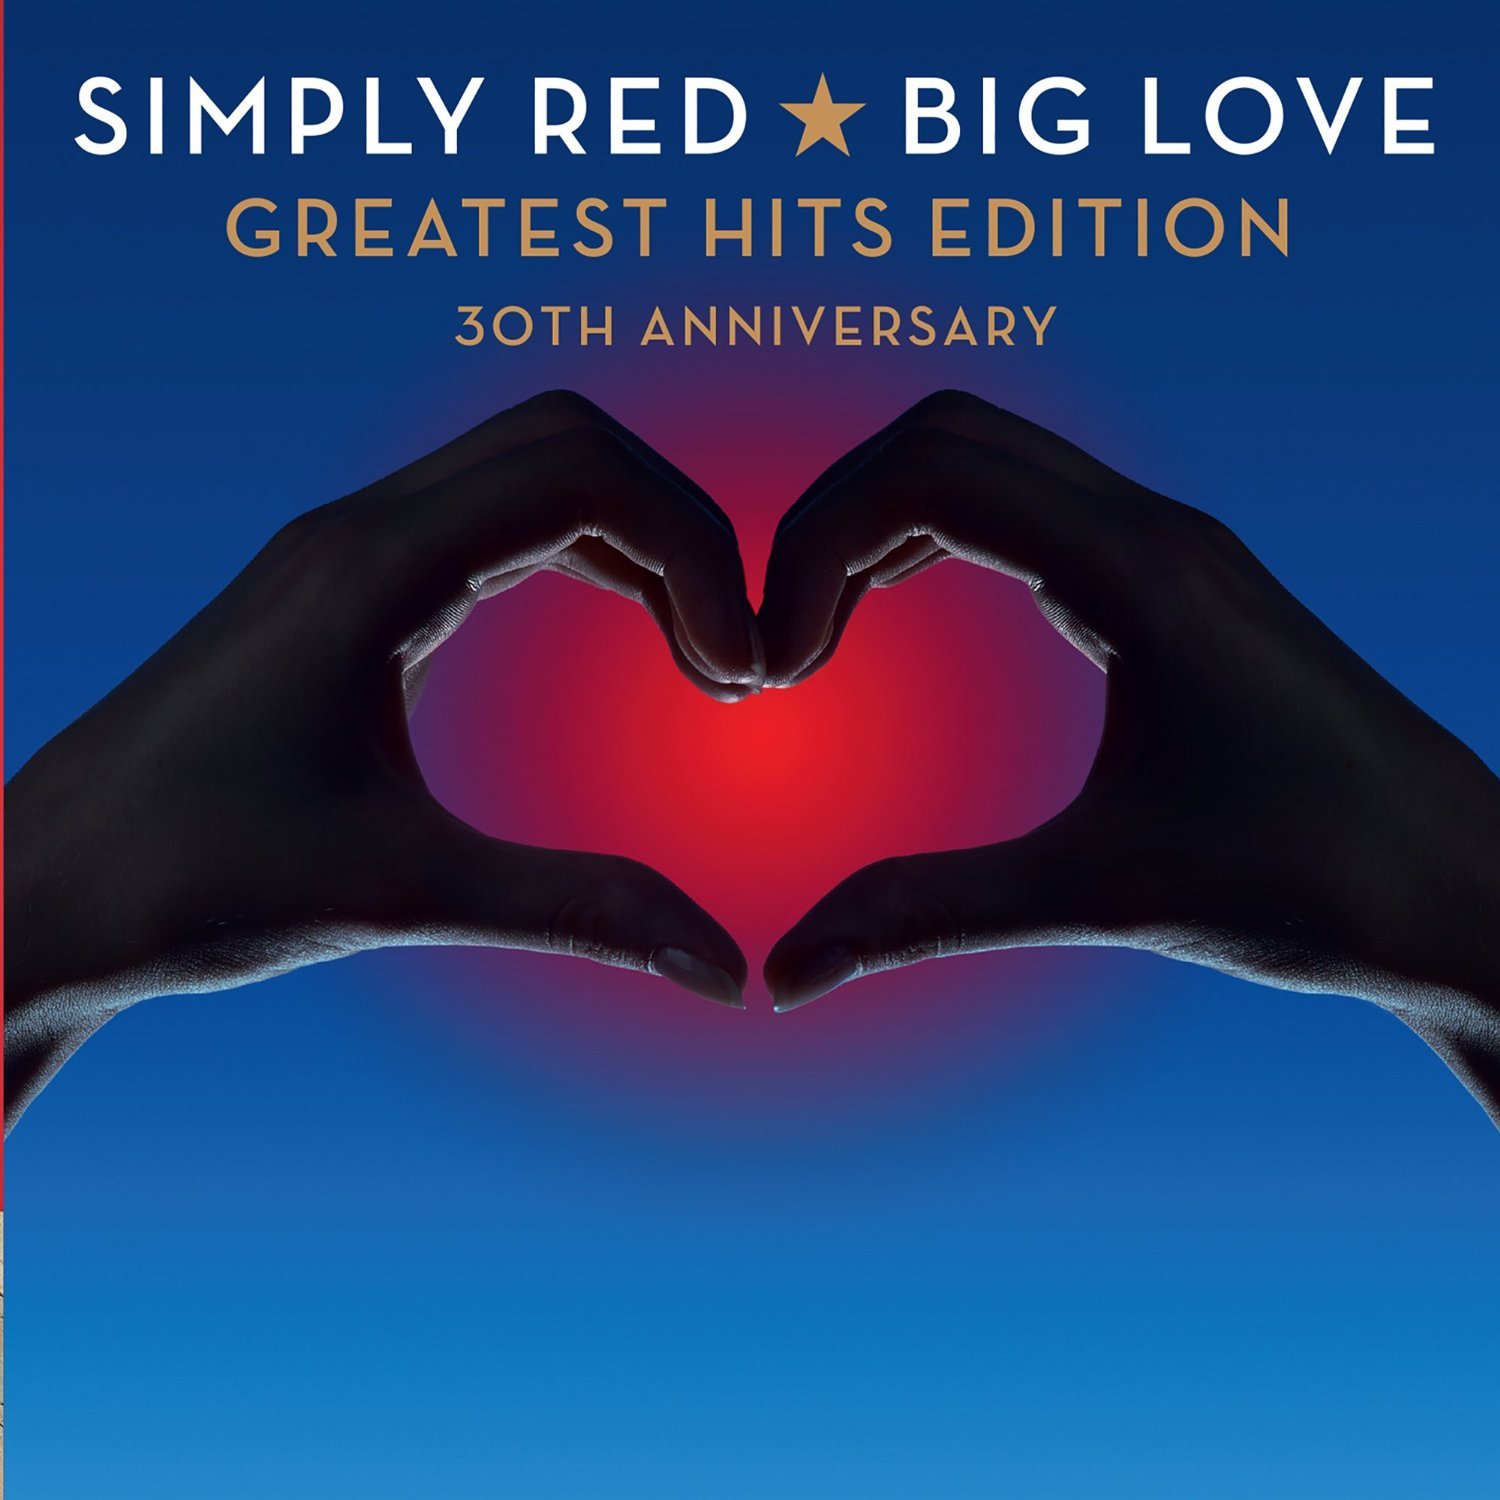 Big love com. Big Love simply Red. Simply Red Life. The Greatest Hits simply Red. Simply Red "big Love (CD)".